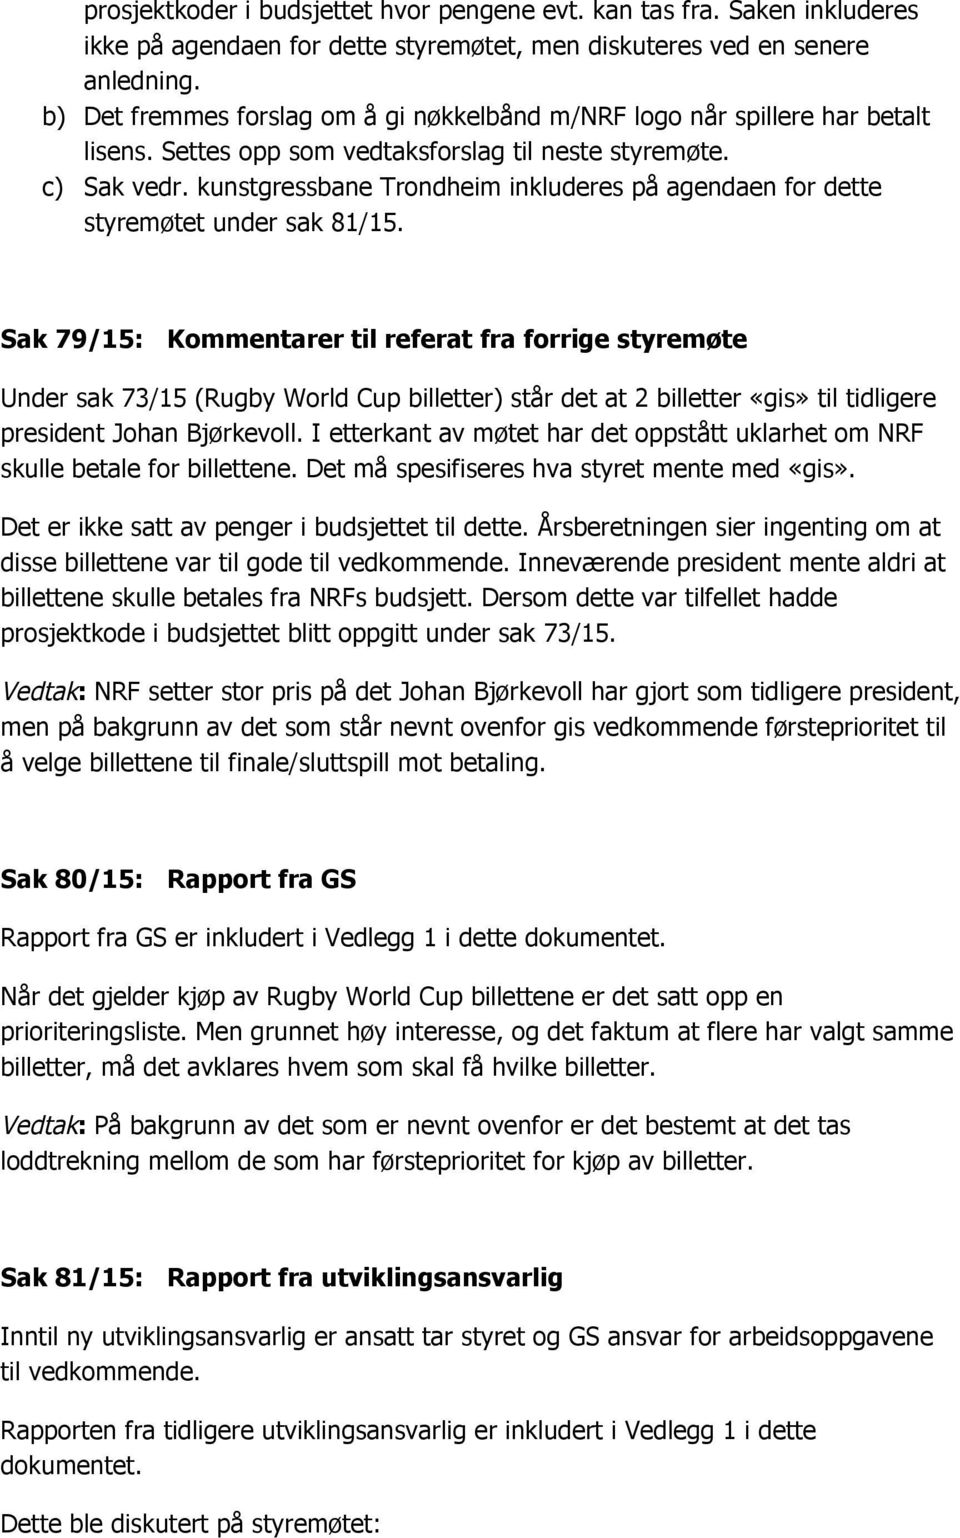 kunstgressbane Trondheim inkluderes på agendaen for dette styremøtet under sak 81/15.